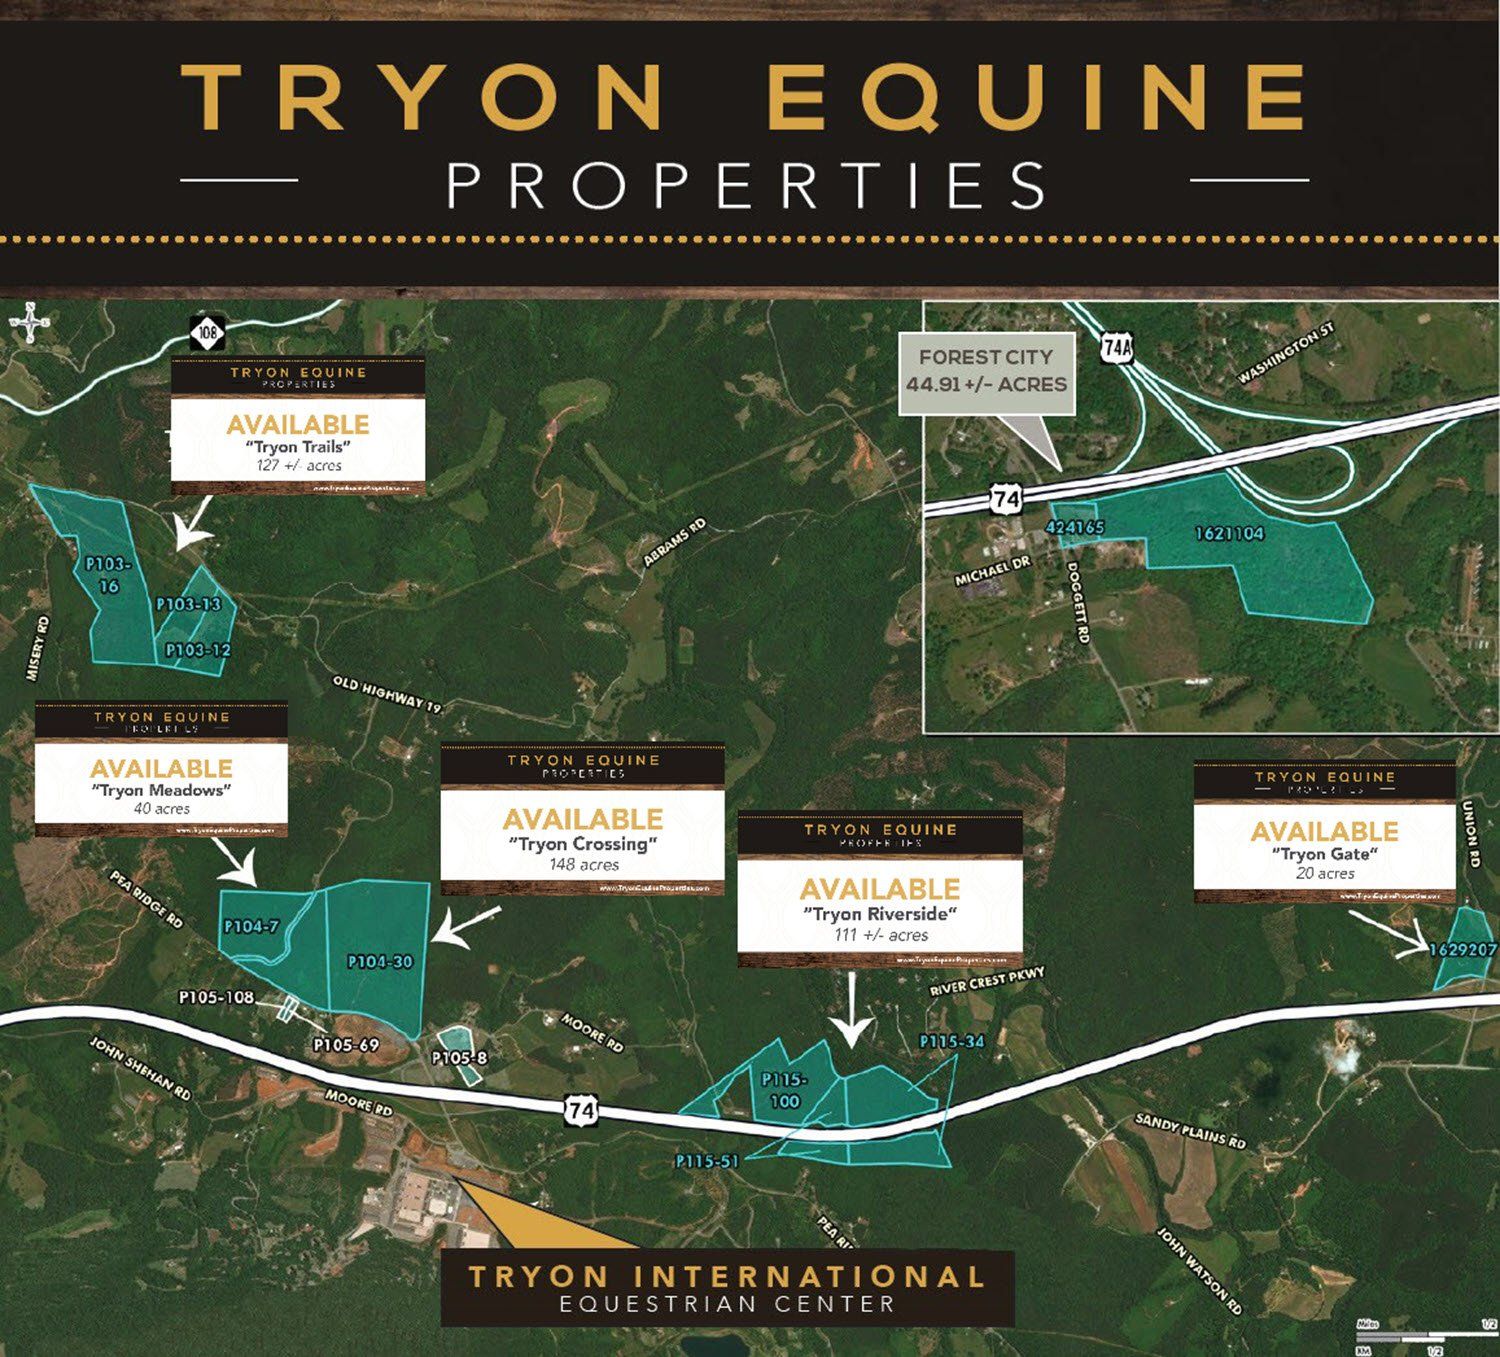 Tryon Equine Properties